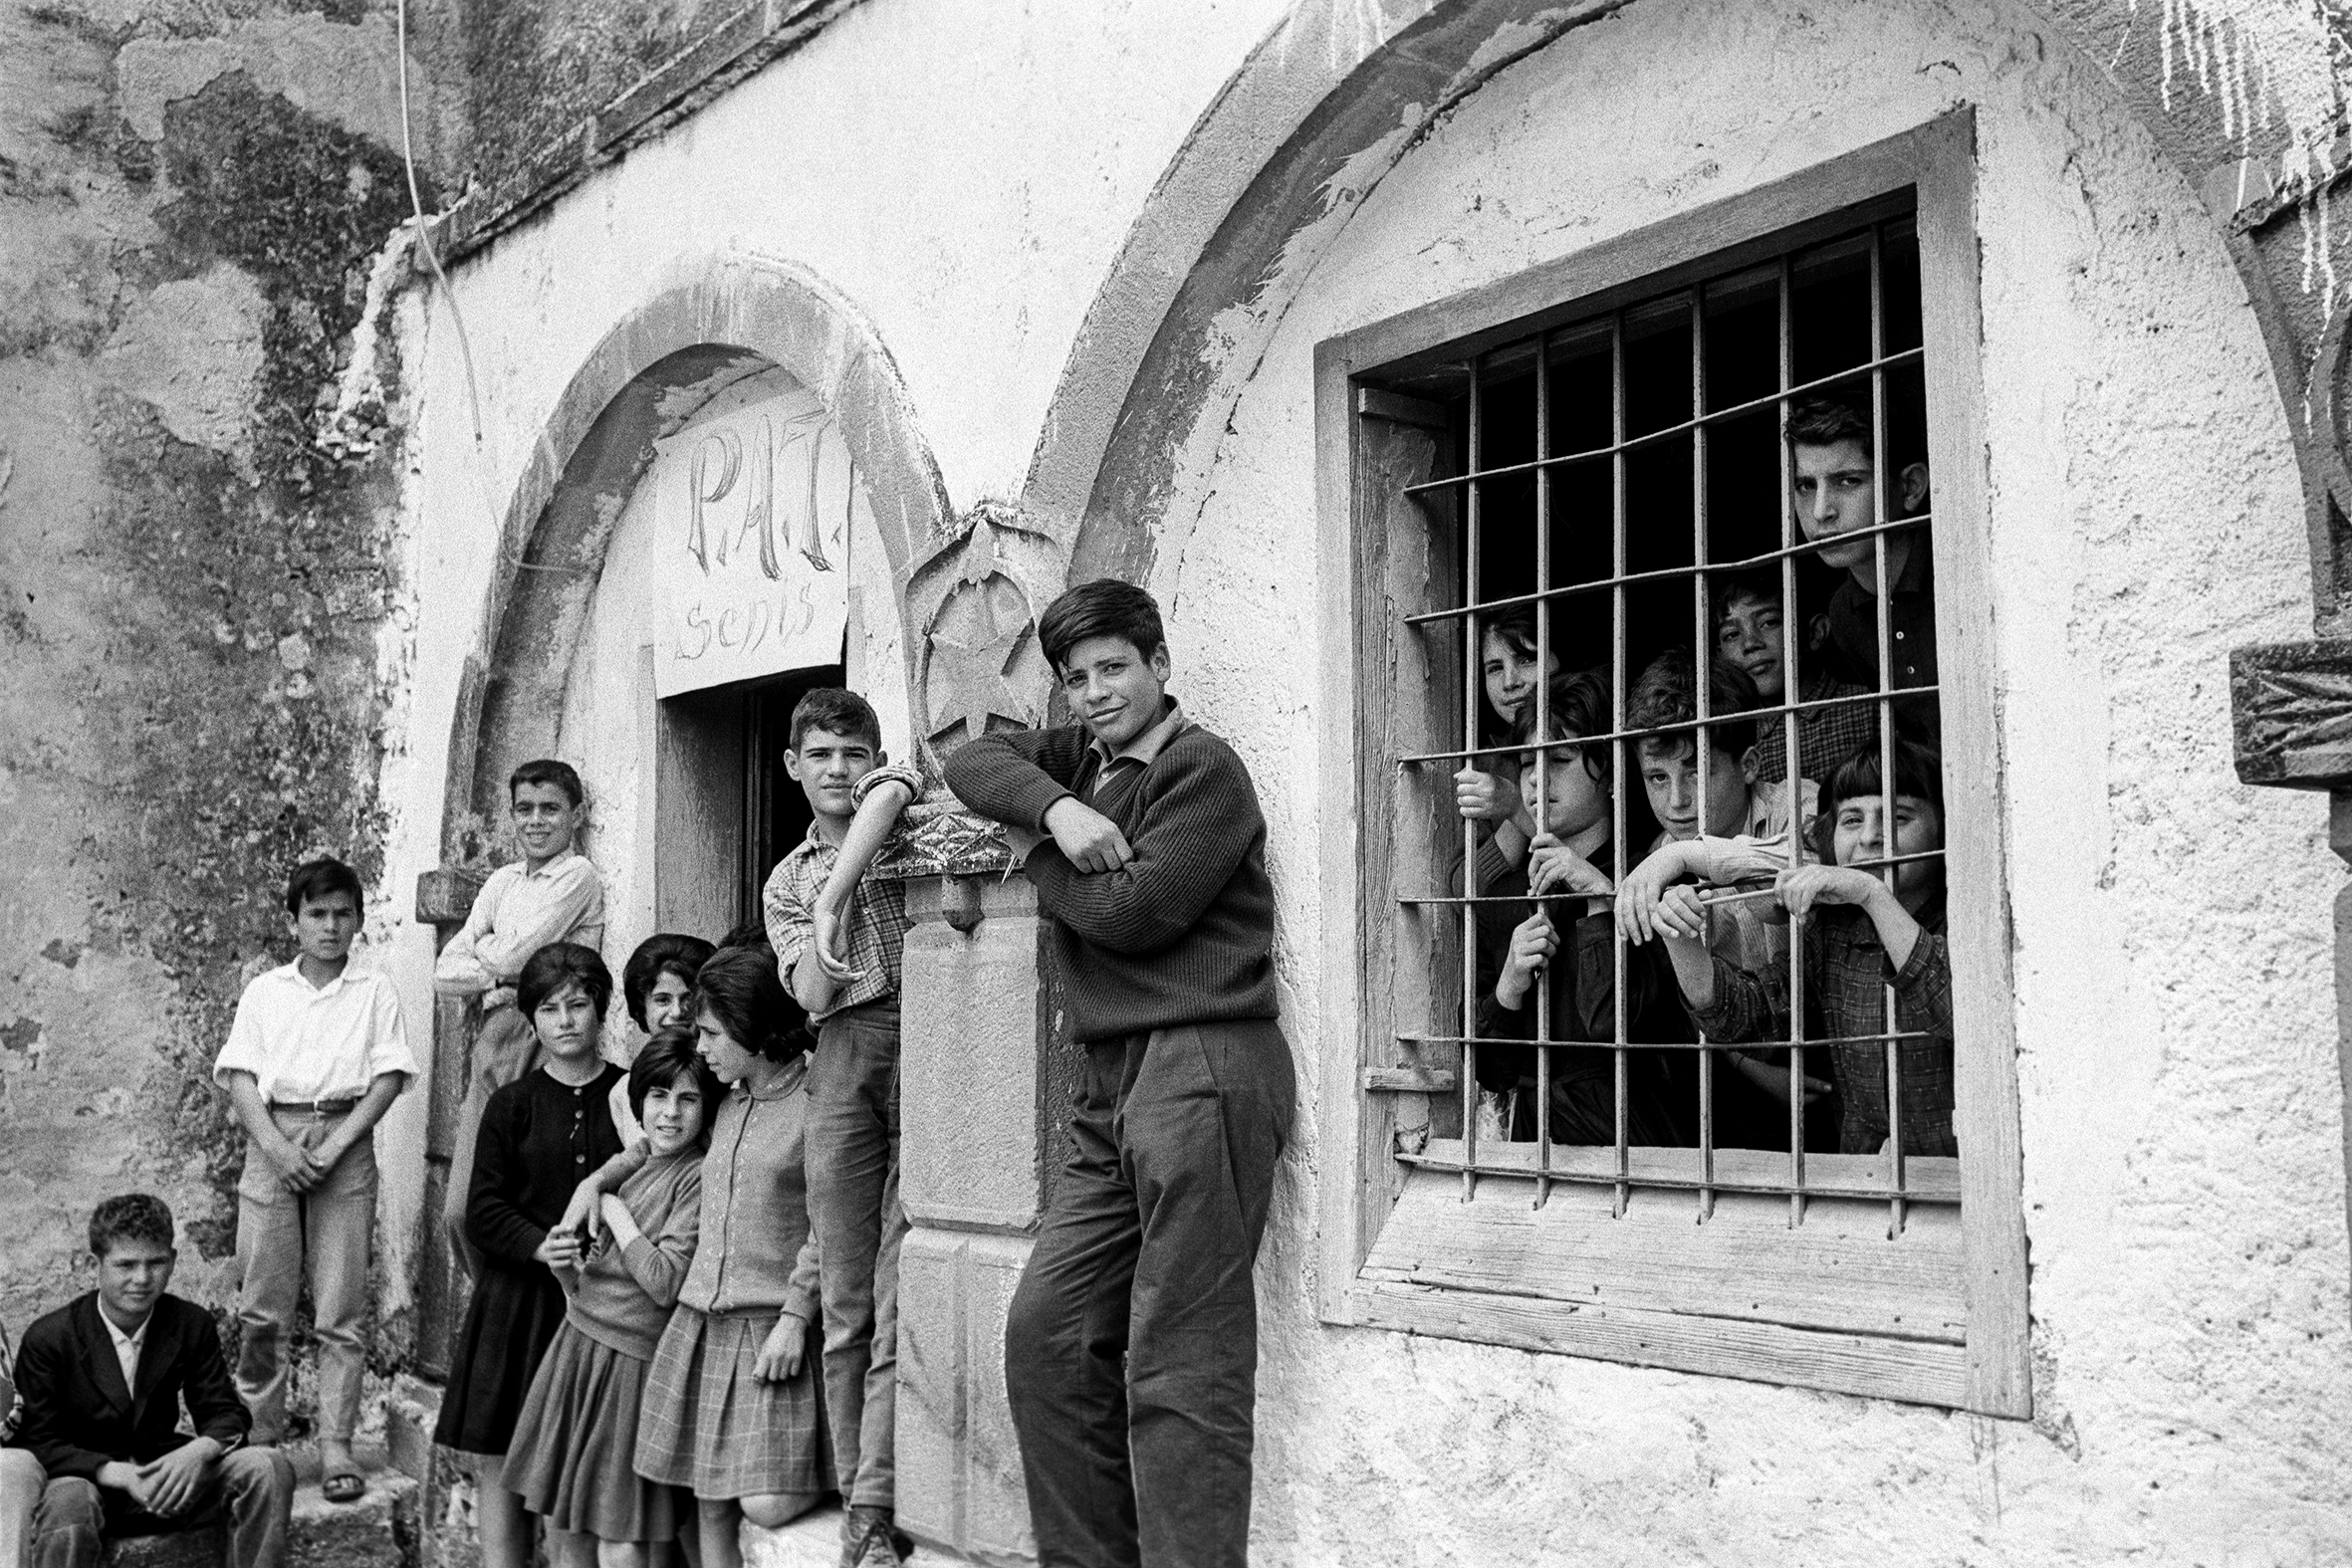 SCUOLA - 2 – Fuori dall’aula, Senis, Sardegna, 1964